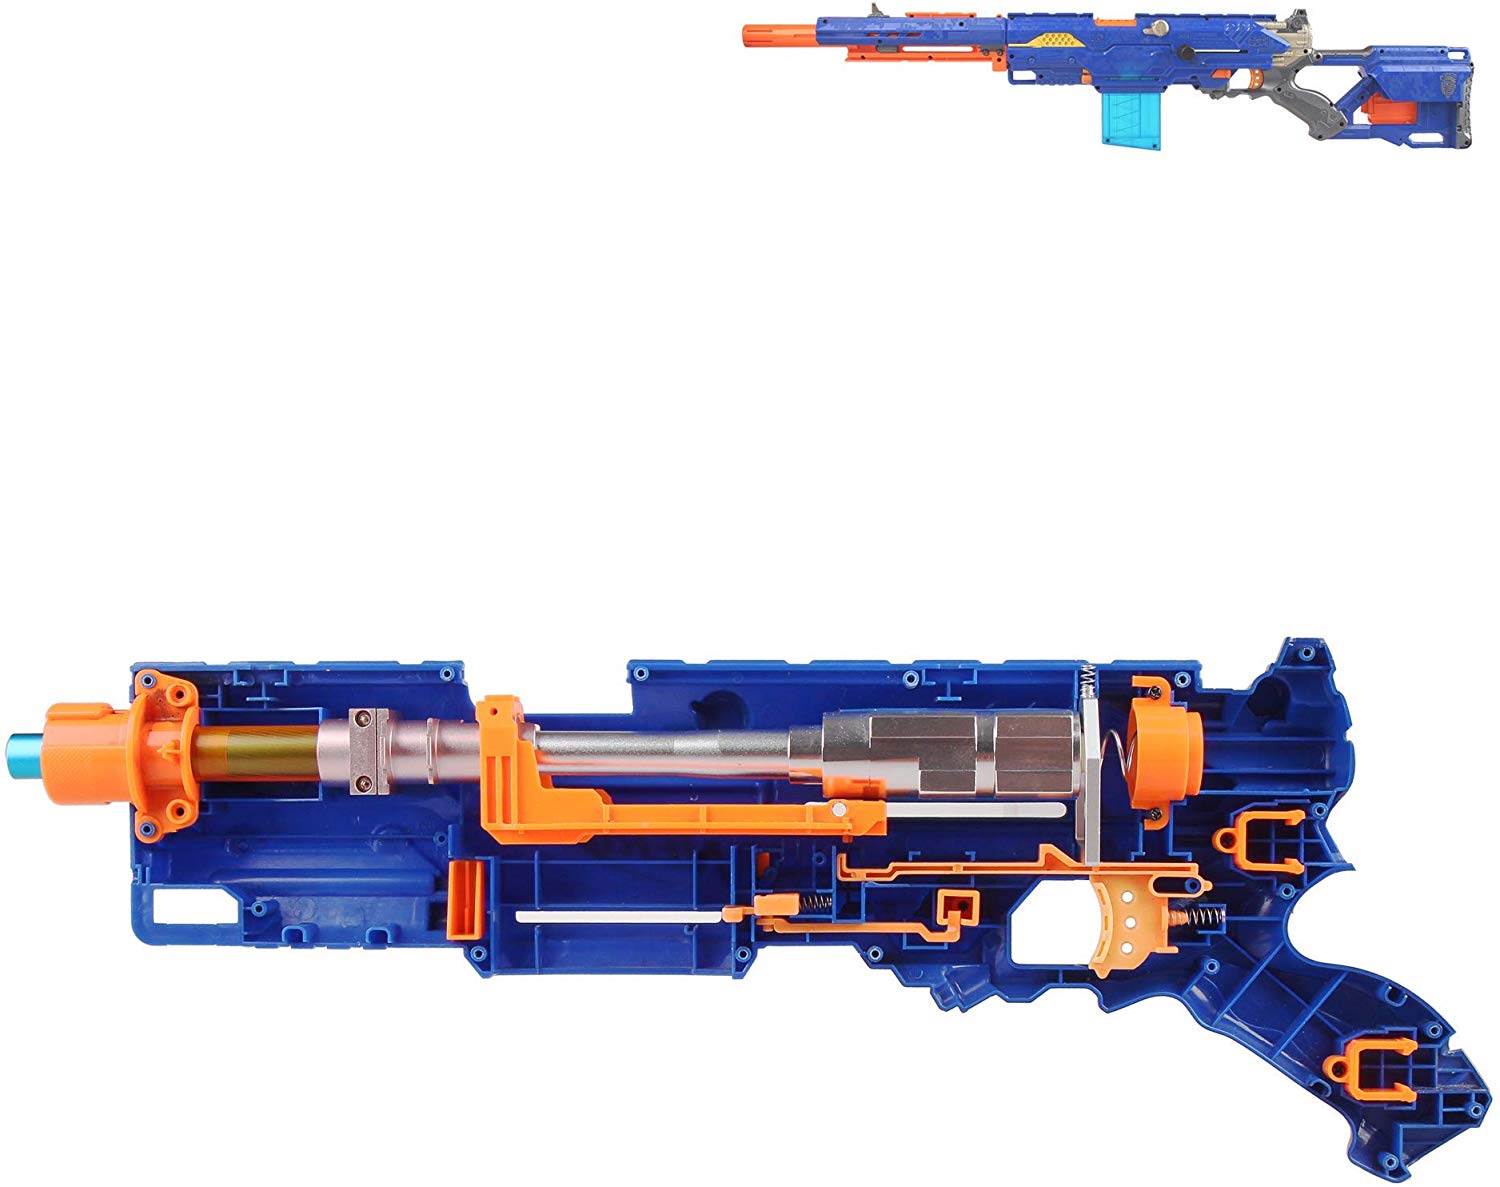 Nerf N-Strike Deploy CS-6 Dart Blaster Gun Tactical Flood Light